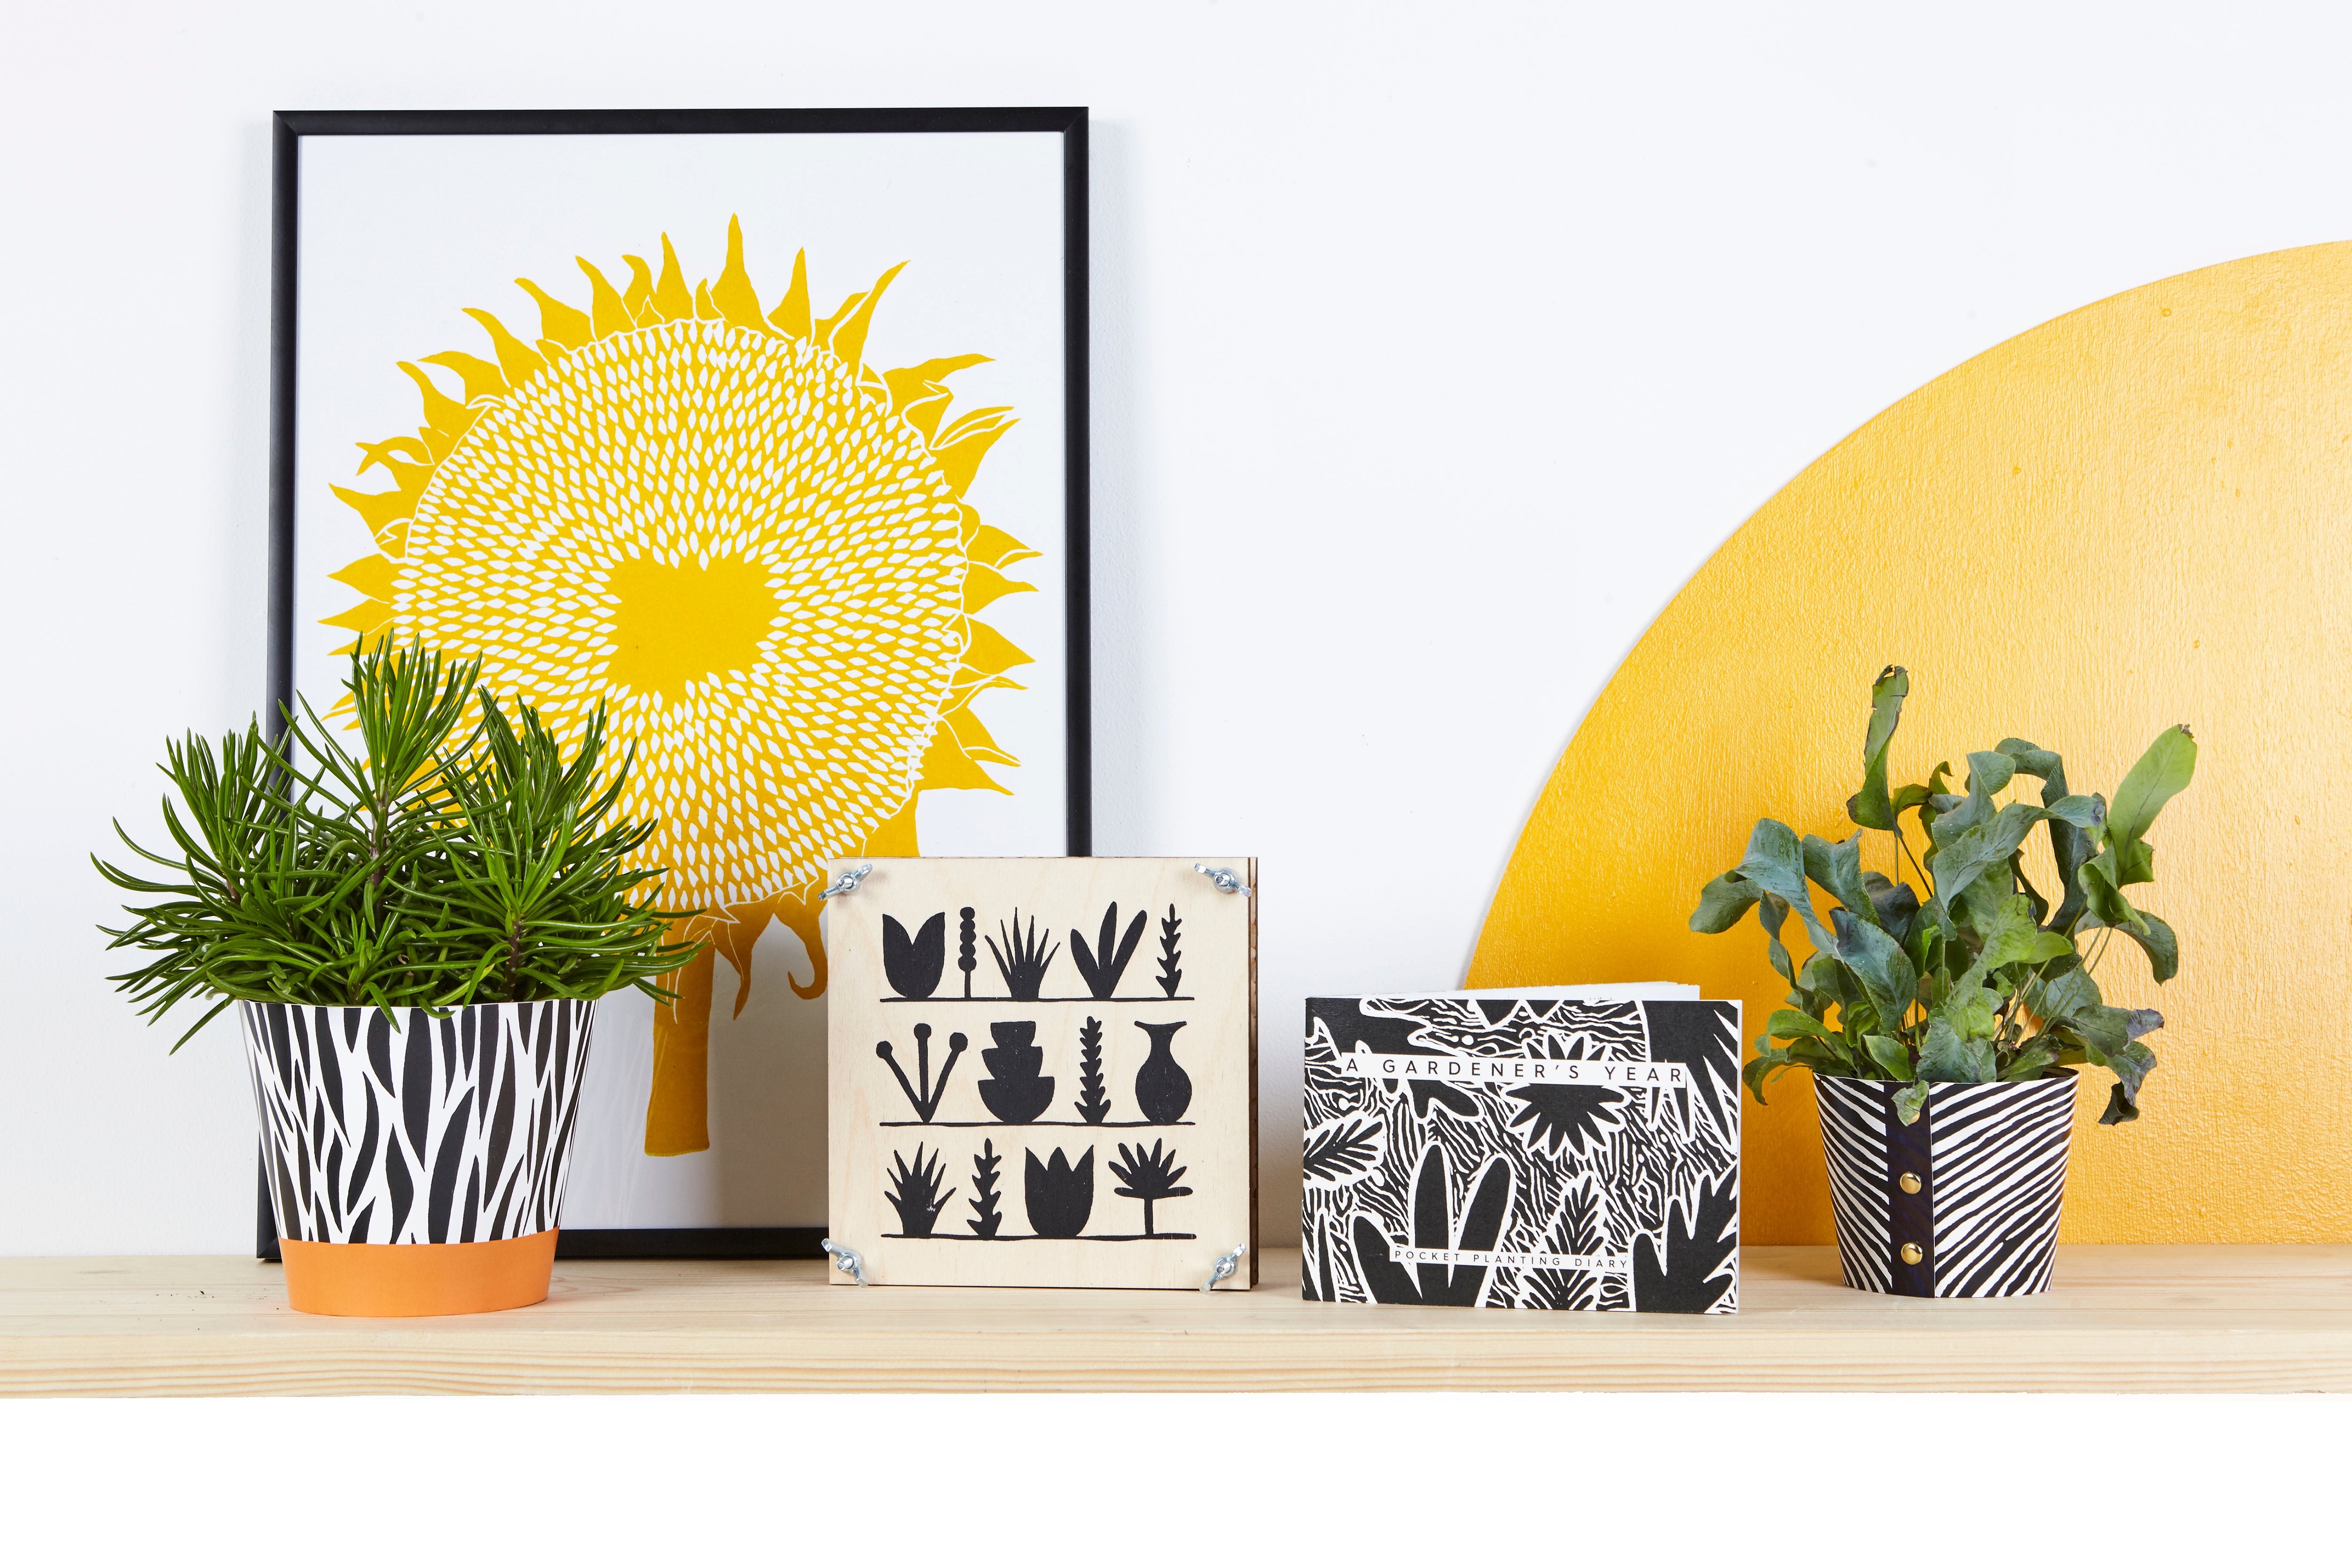 Sunflower Lino Print (Ylw)